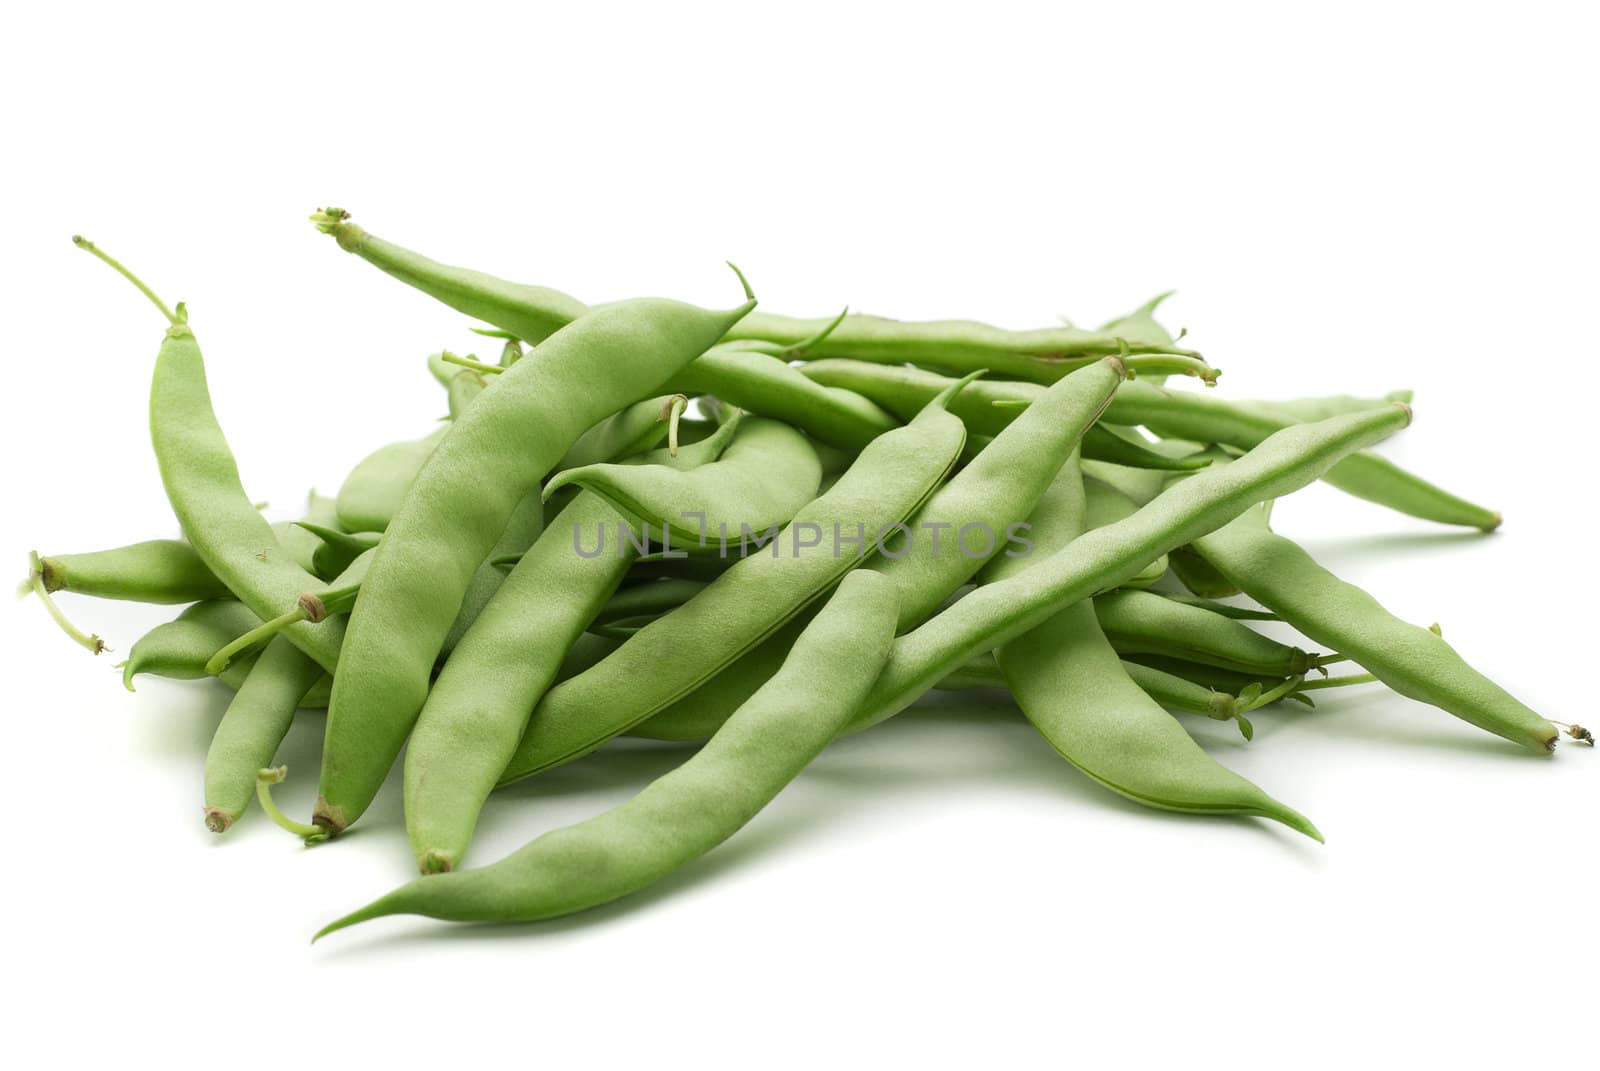 Bunch of fresh green beans isolated on white background by GennadiyShel